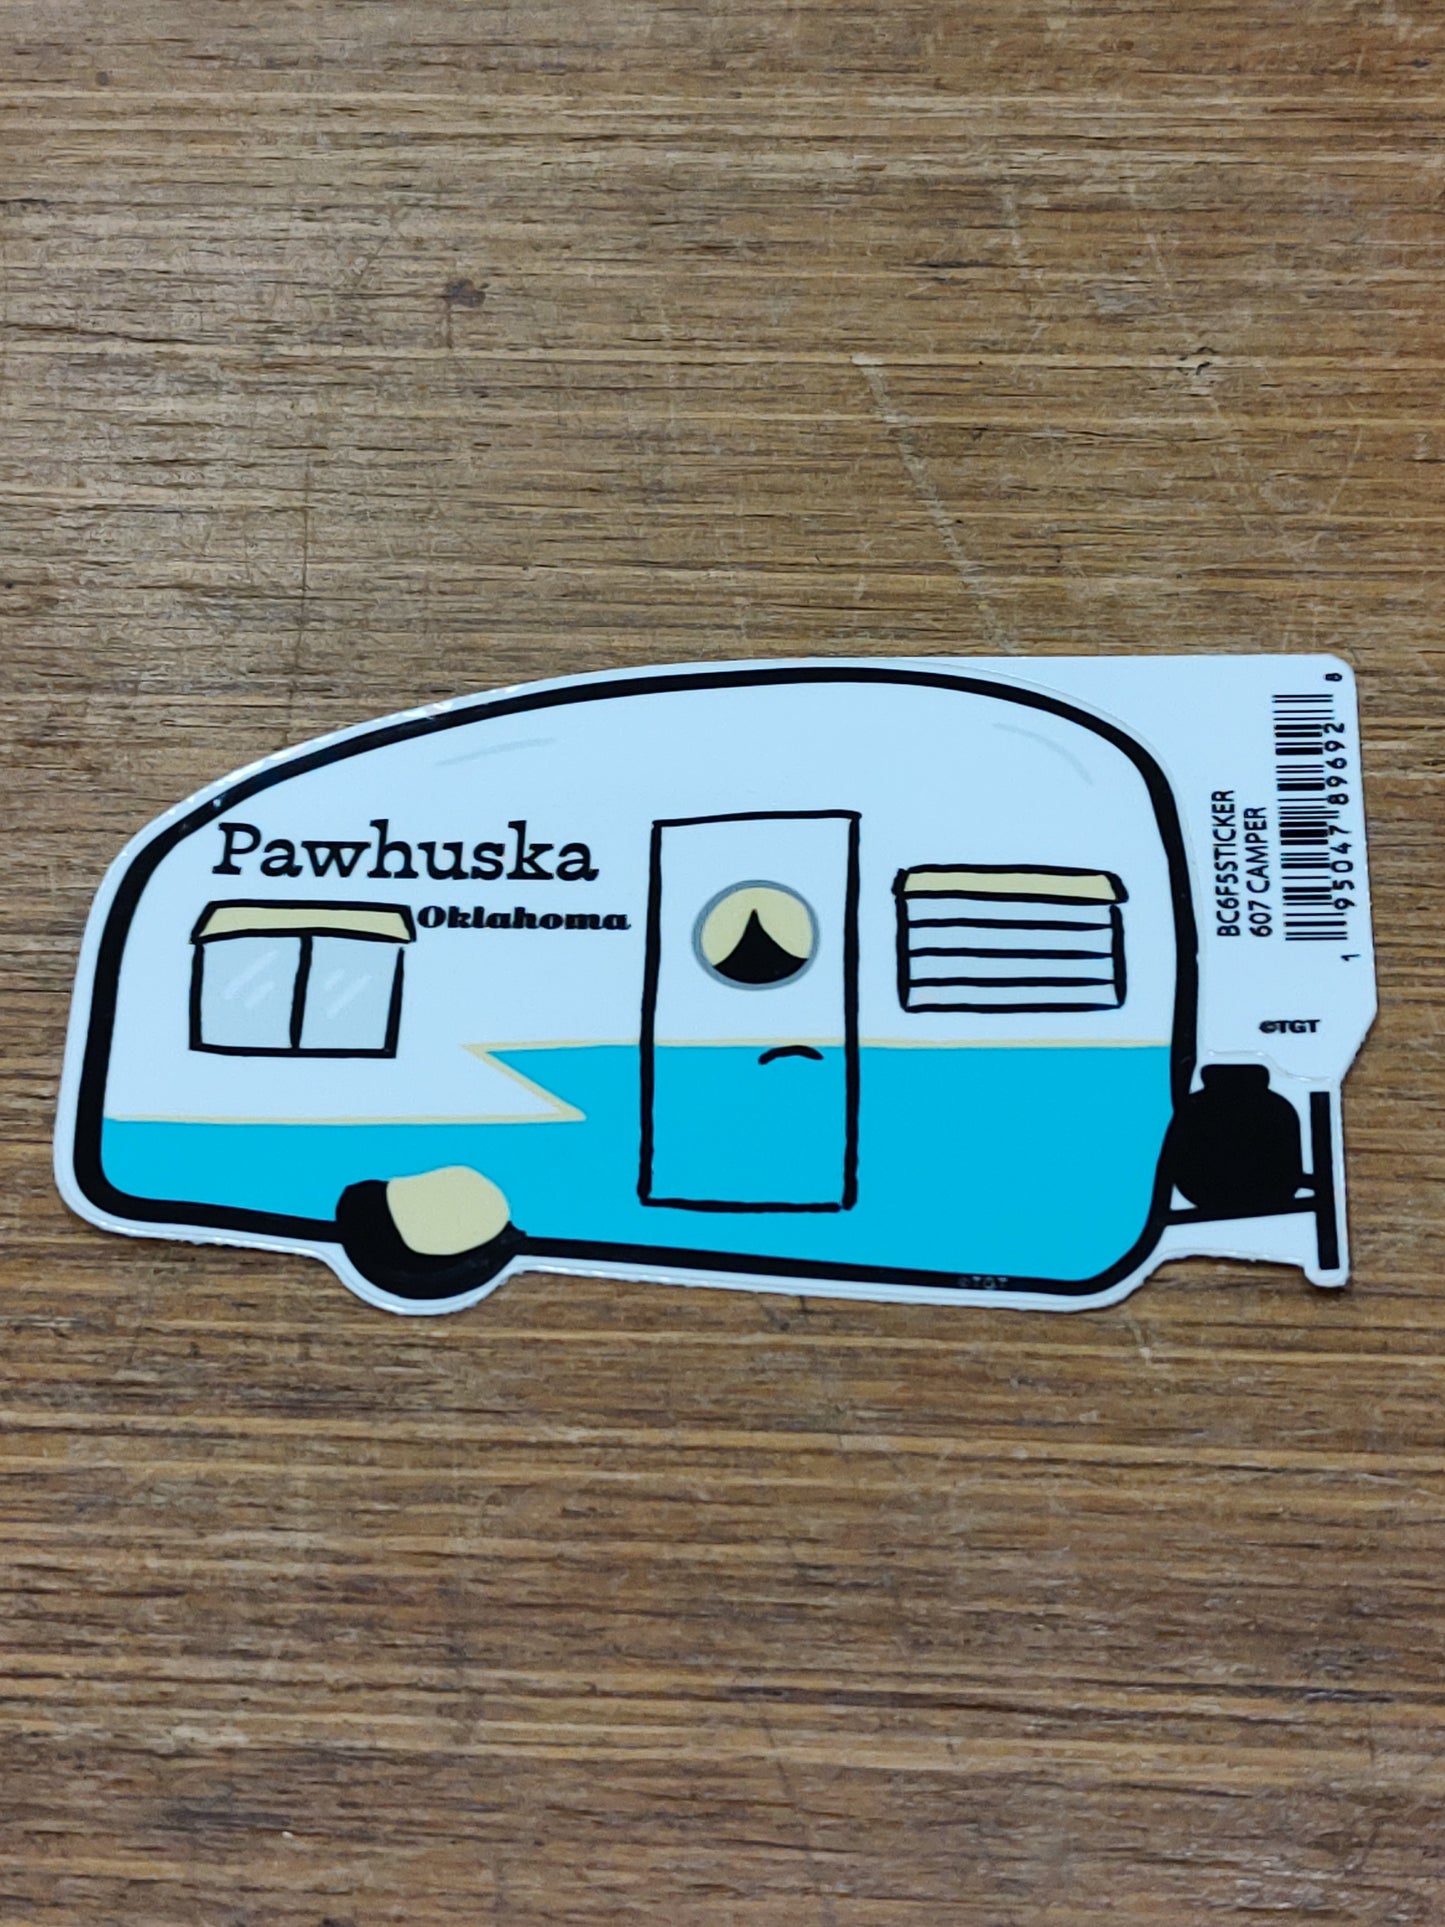 Pawhuska, OK camper - sticker